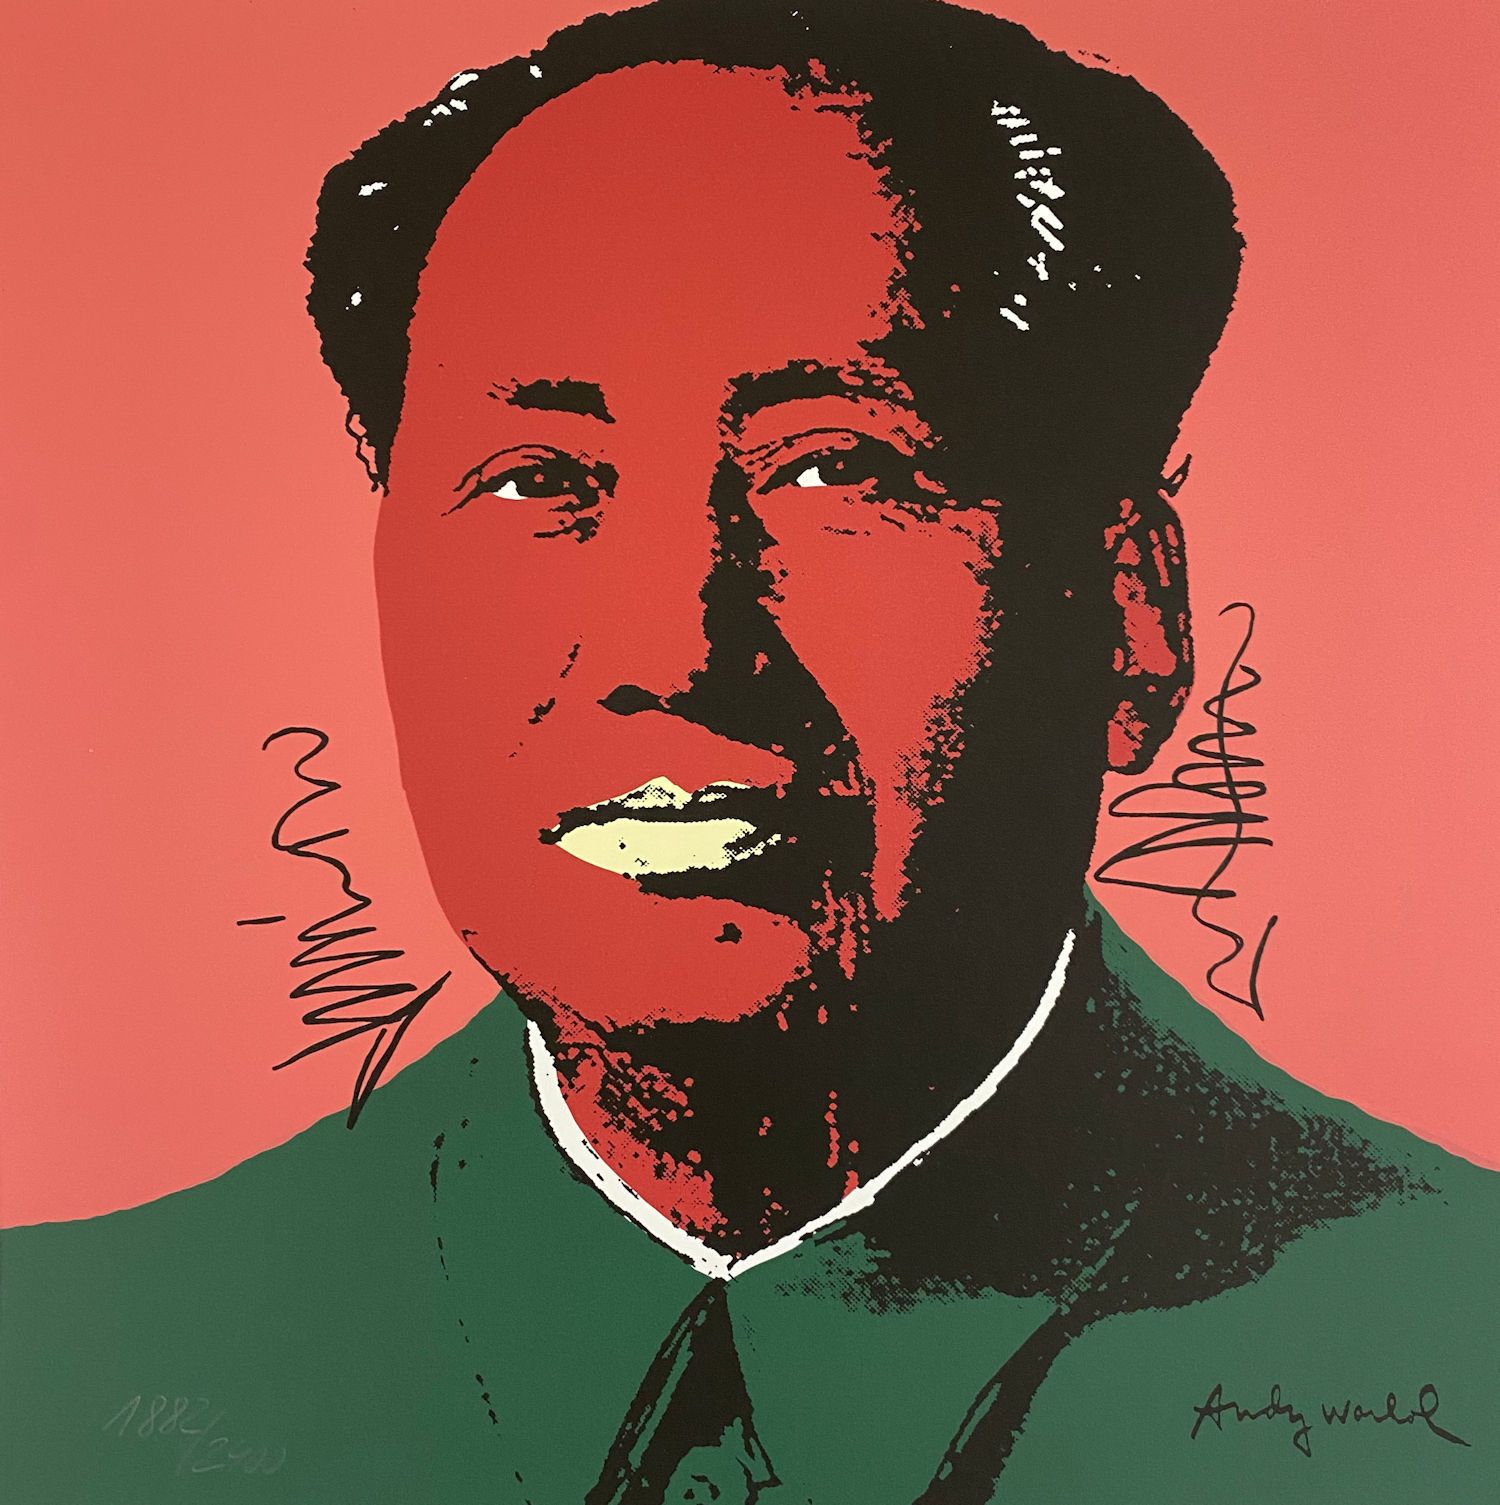 ANDY WARHOL 安迪-沃霍尔（后）

红色毛泽东

根据艺术家的作品制作的石版画

版面上有签名，并有铅笔编号

限量发行2400册

在CMOA的背面&hellip;